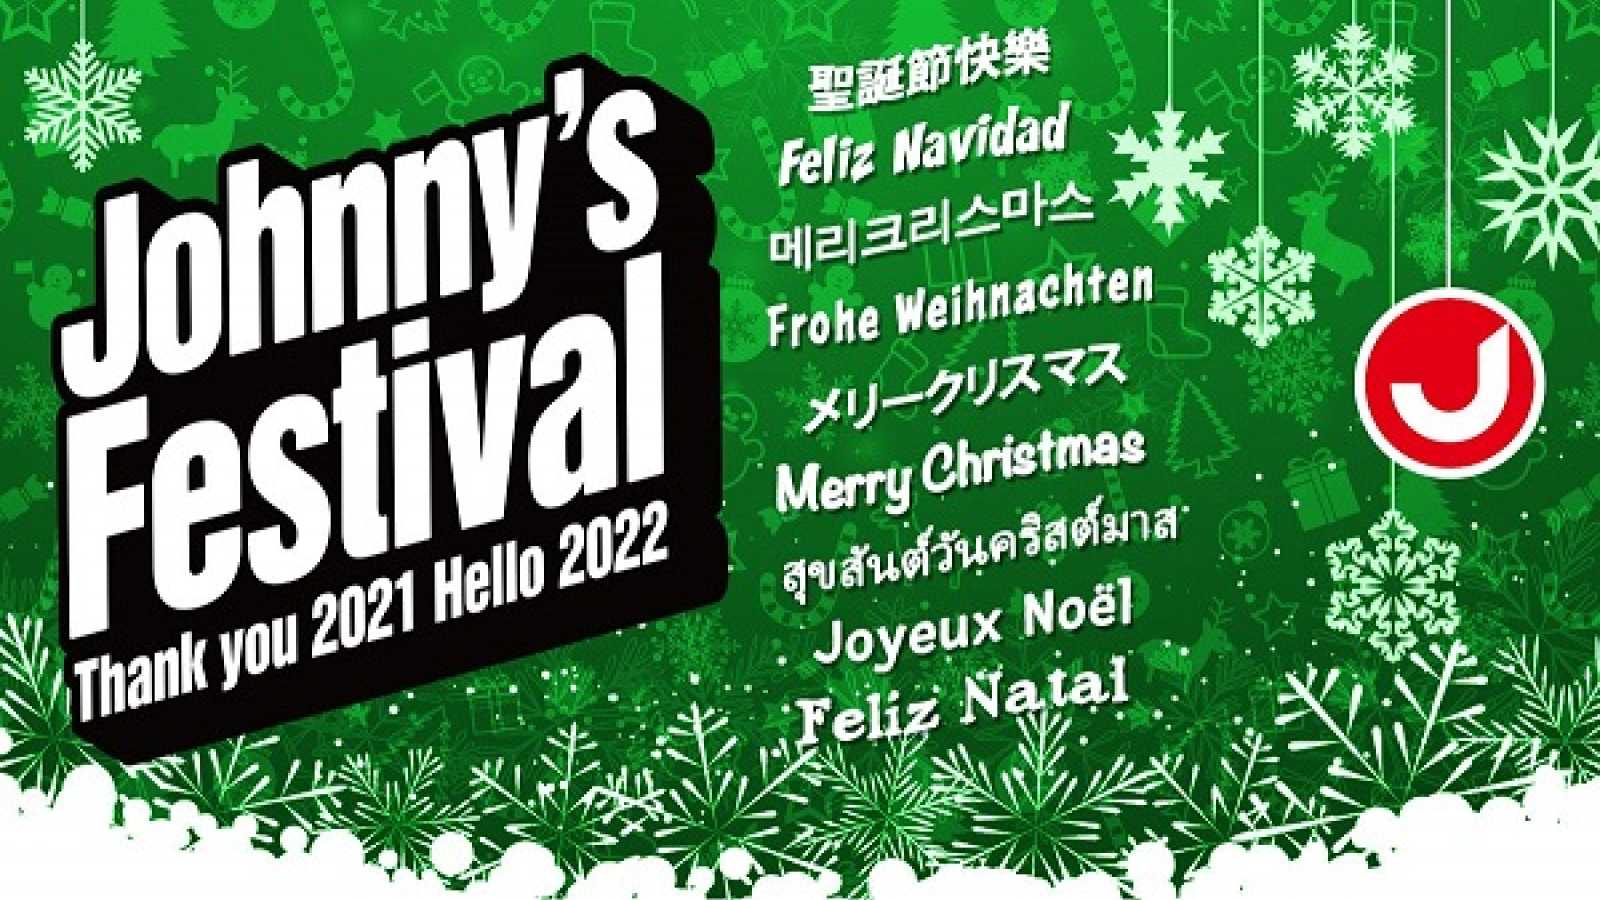 Johnny's Festival ‾ Thank you 2021 Hello 2022